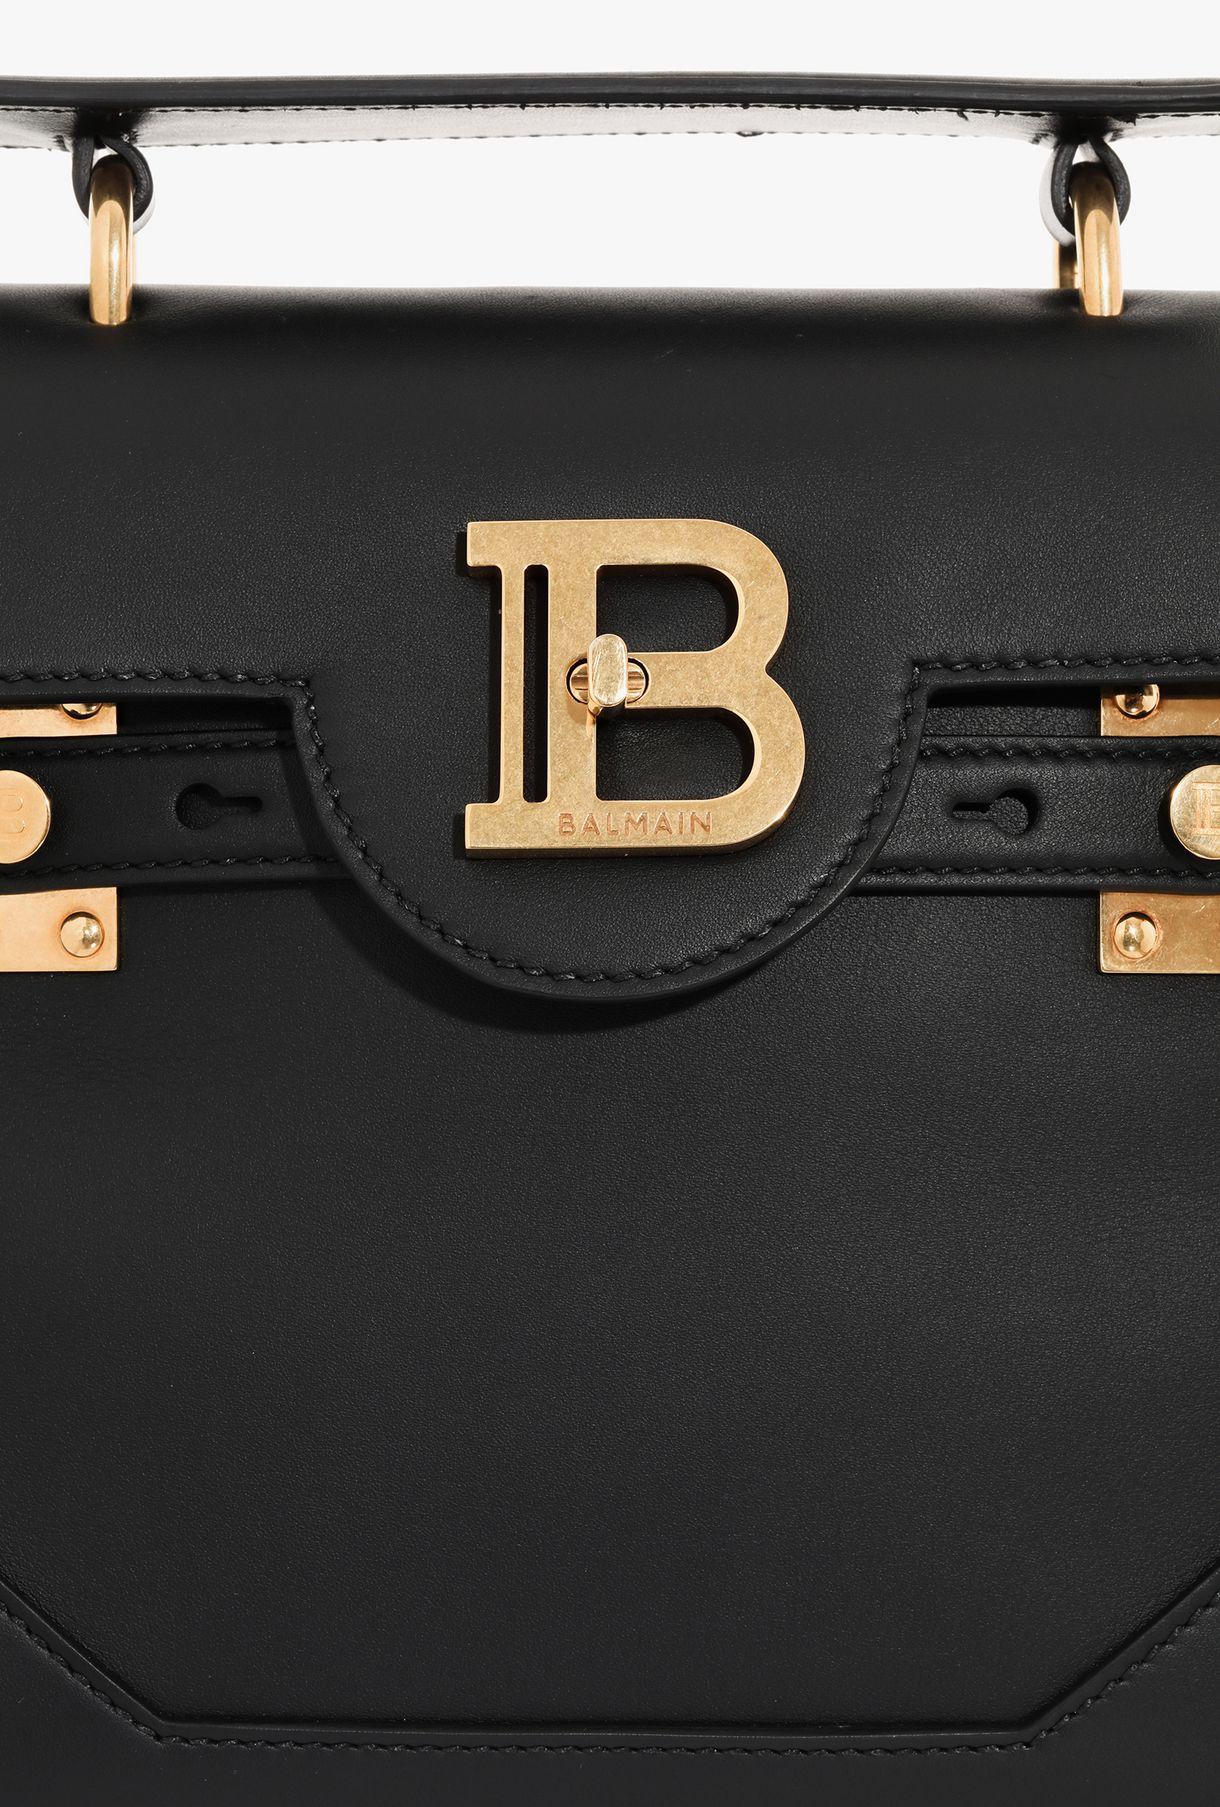 Balmain Smooth Leather B-buzz 23 Bag in Black - Lyst